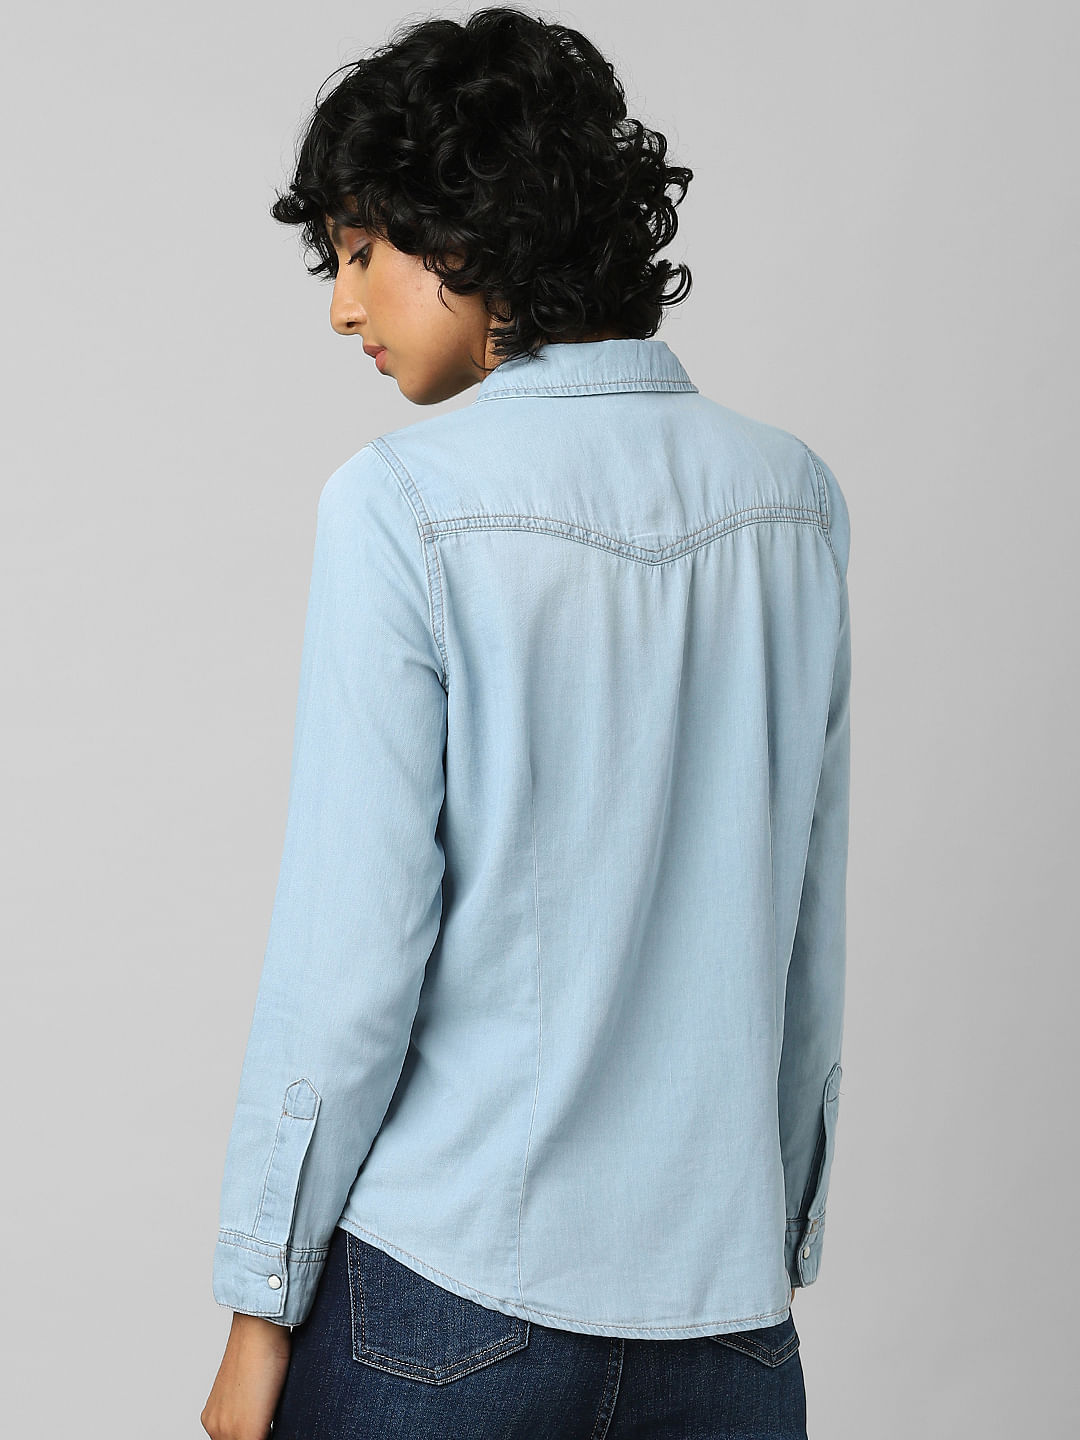 Buy Lady Bird Women Sleeveless Solid Denim Shirt Top, Light Blue, X-Large  Size at Amazon.in